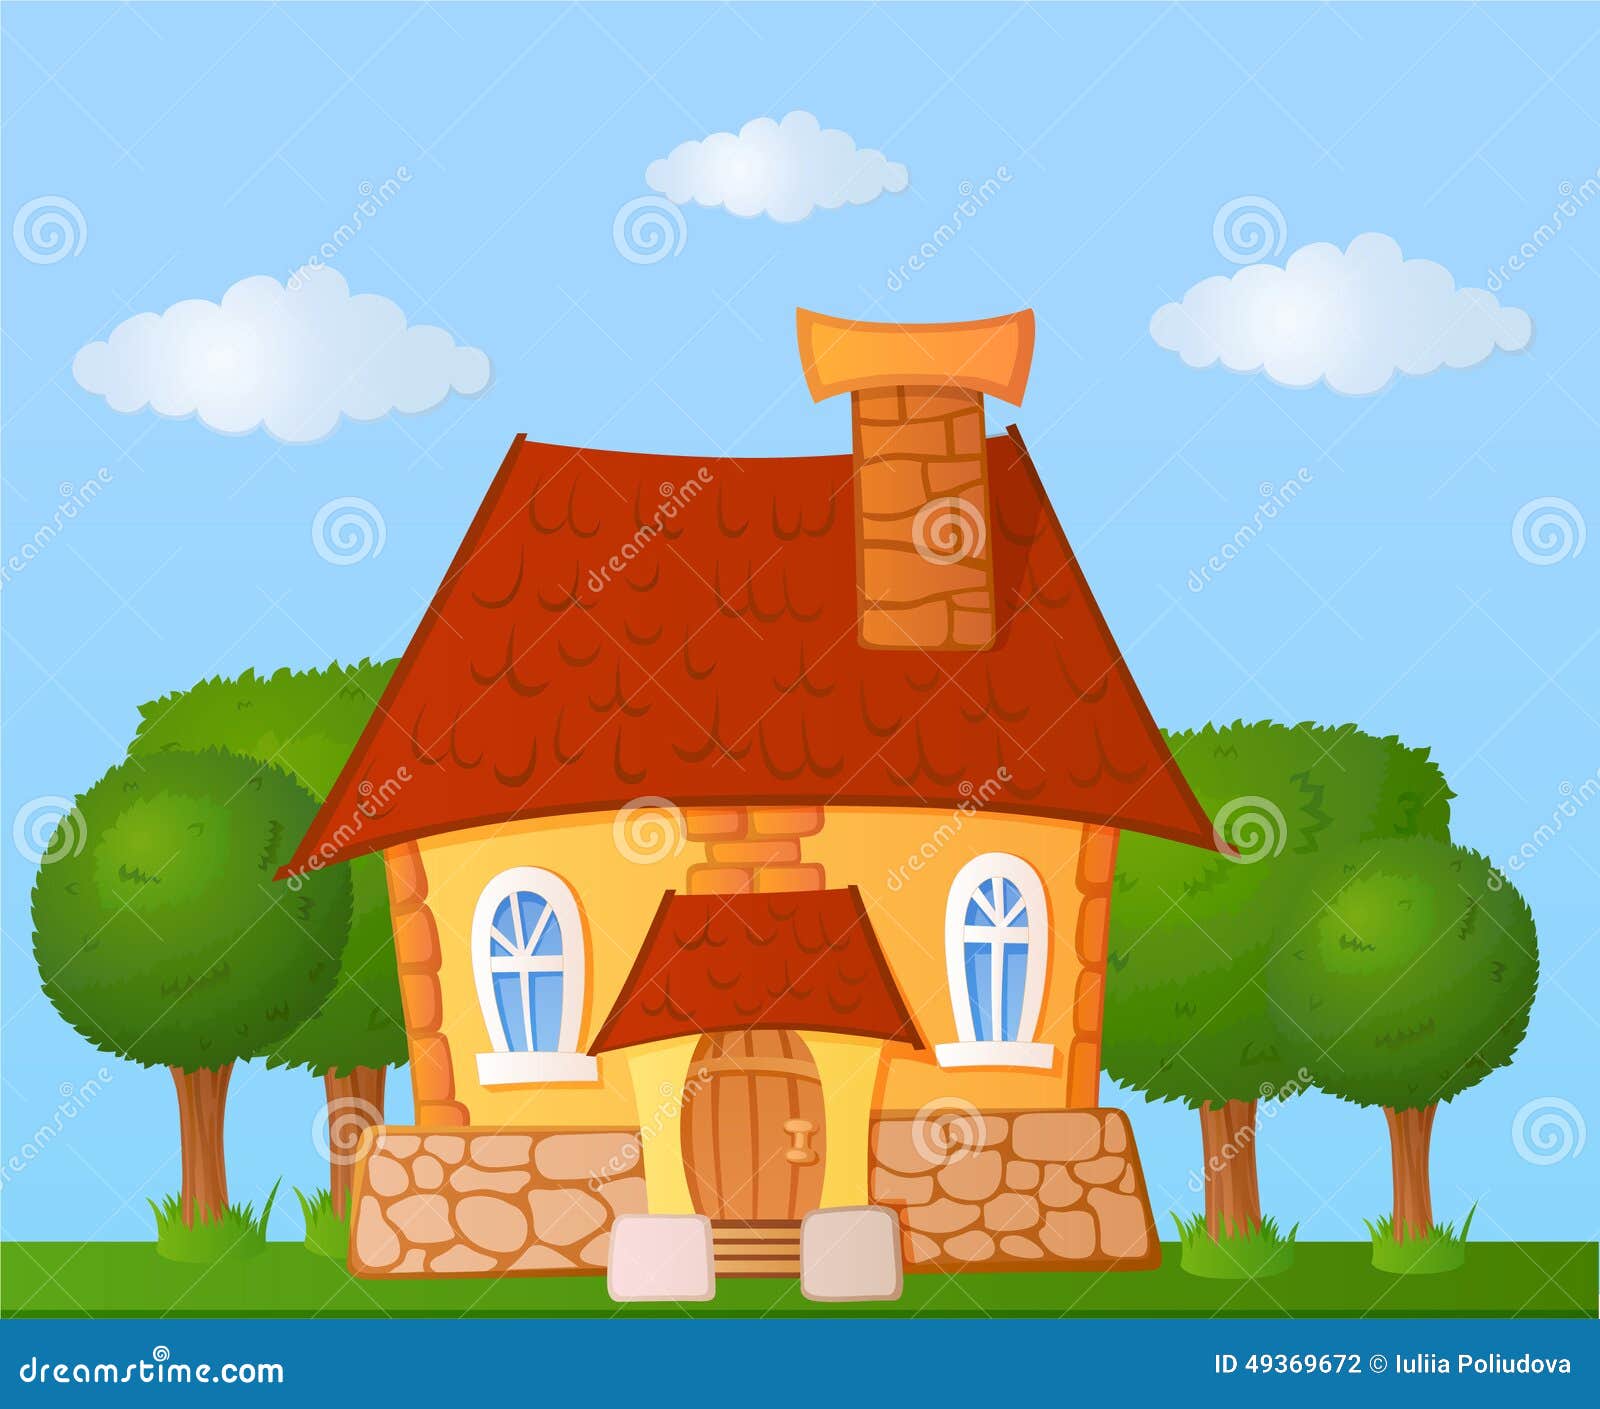 Cartoon house stock illustration. Illustration of cottage - 49369672